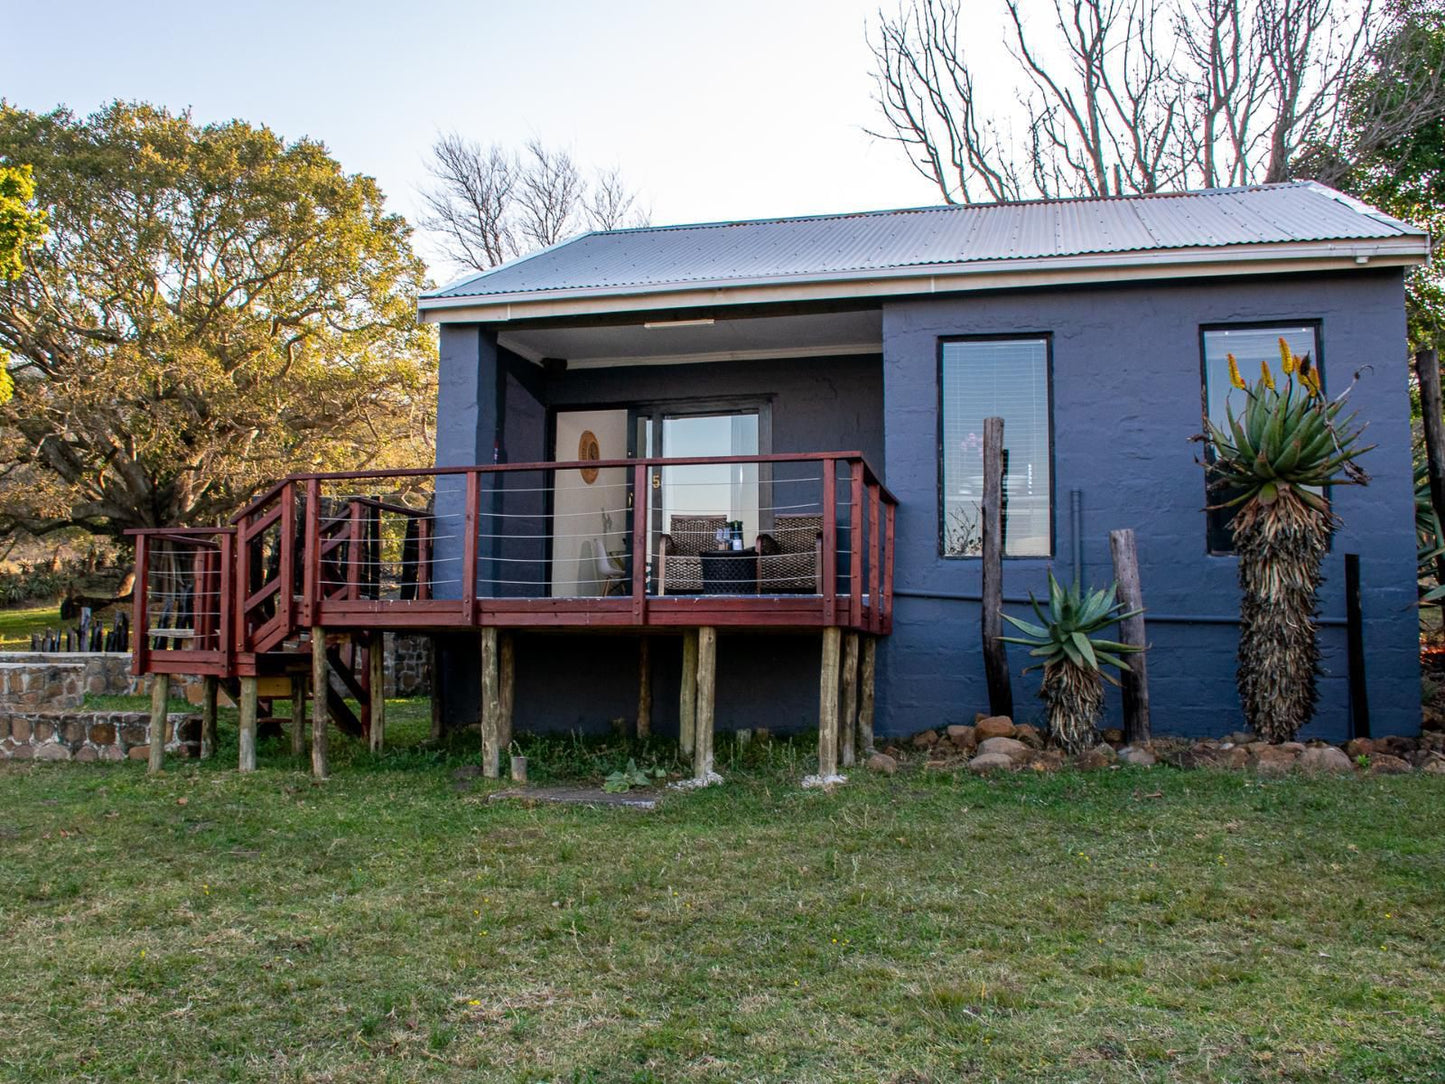 Rorke S Drift Lodge Rorkes Drift Kwazulu Natal South Africa House, Building, Architecture